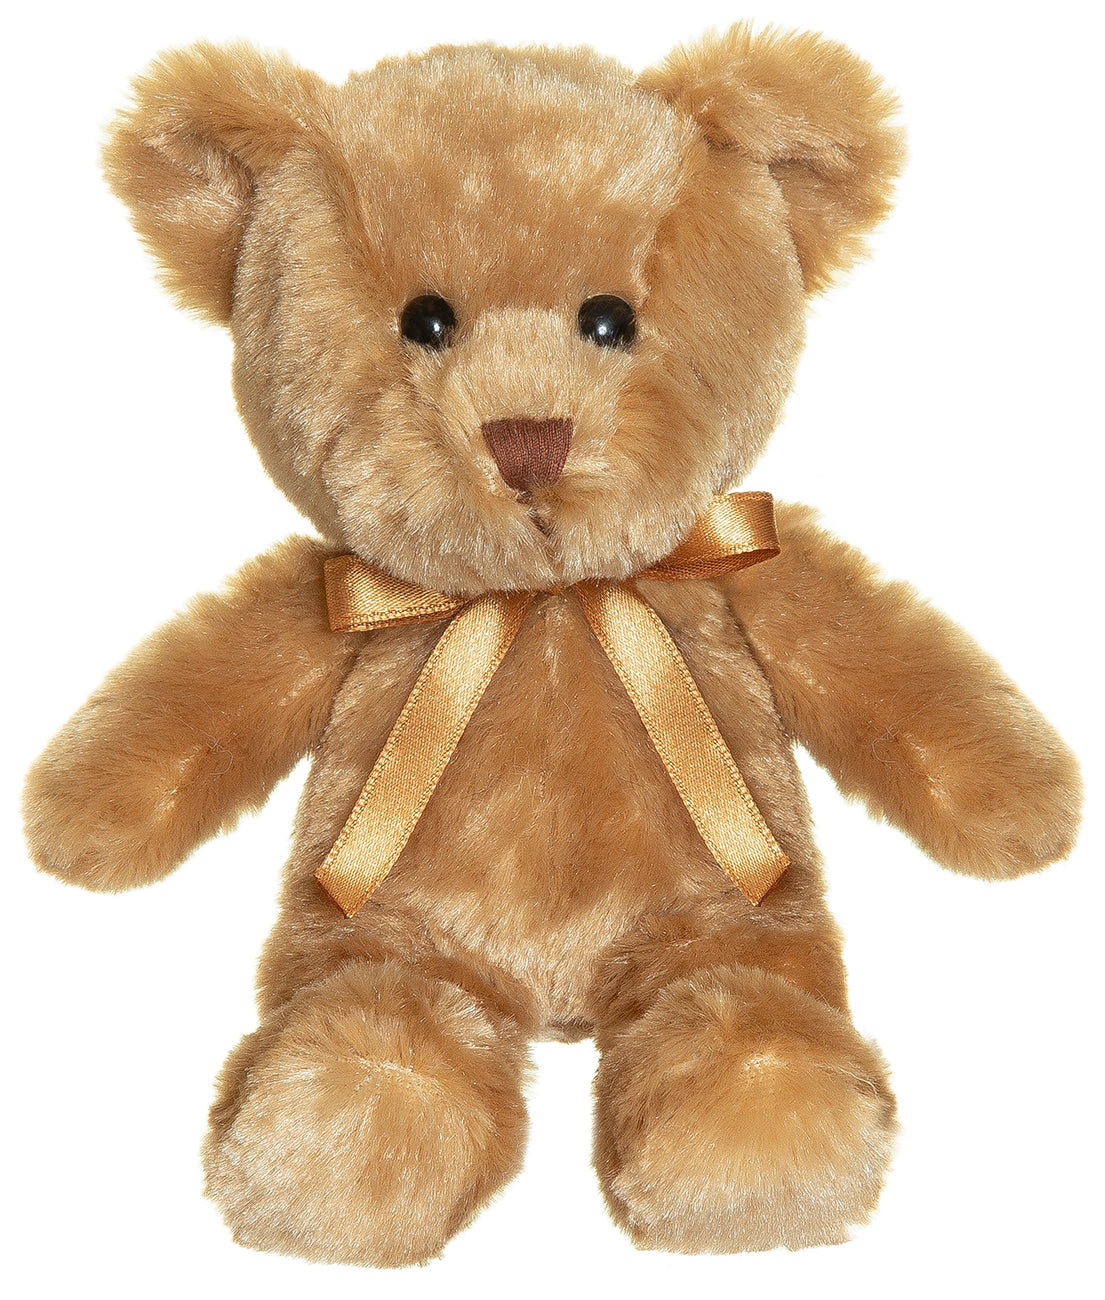 Teddykompaniet Teddies - Theo, Brun, 20 cm